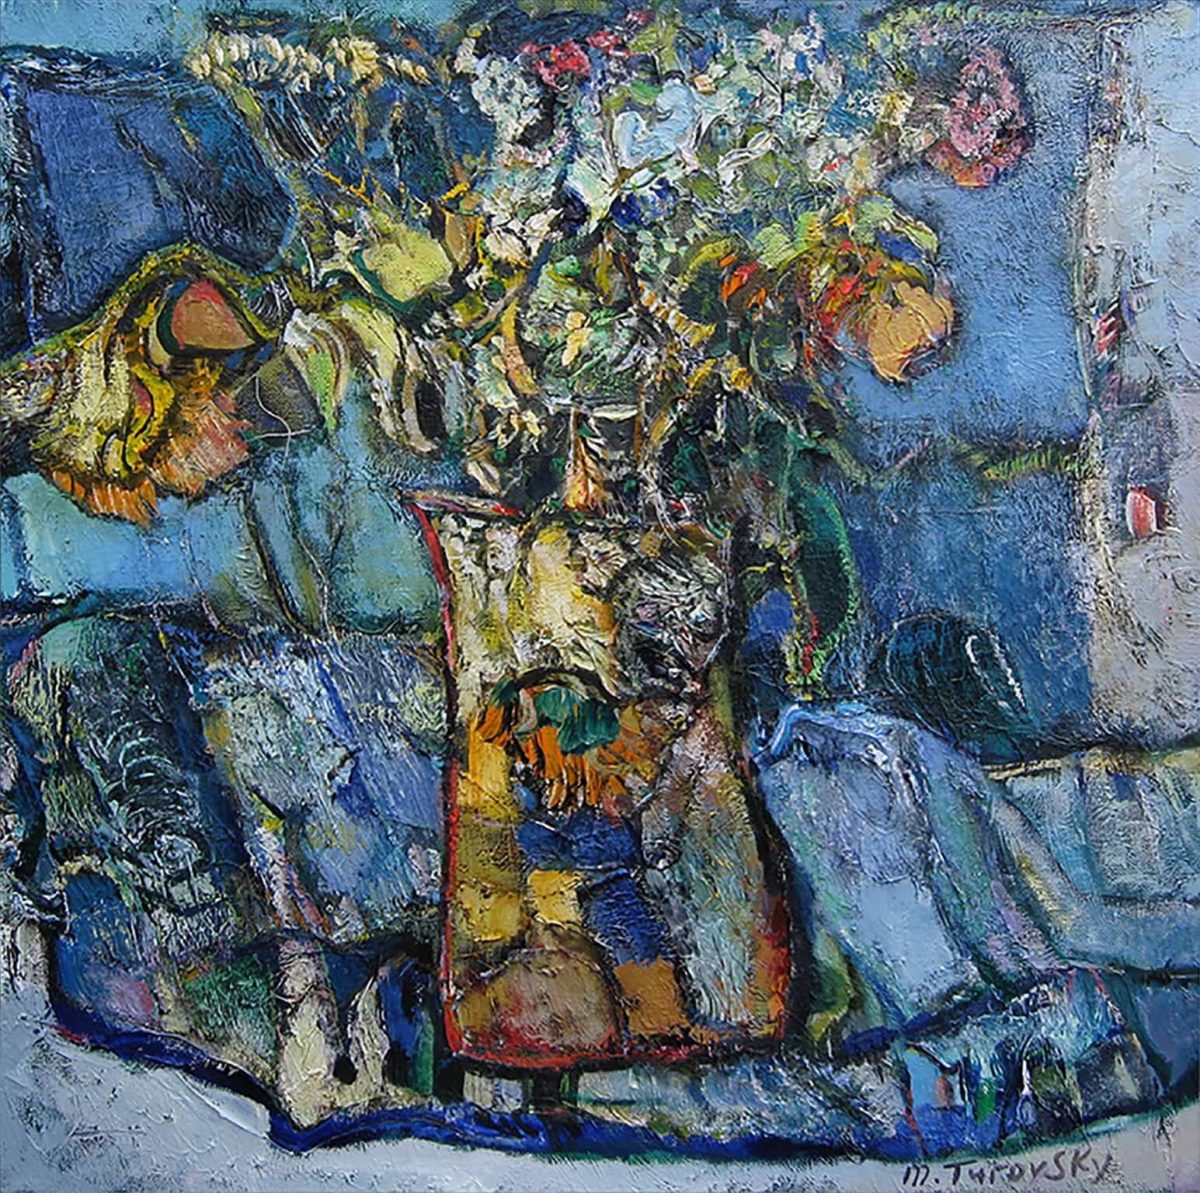 turovsky, autumn flowers (oil on canvas), 76 x 76.JPG Figurative abstract art